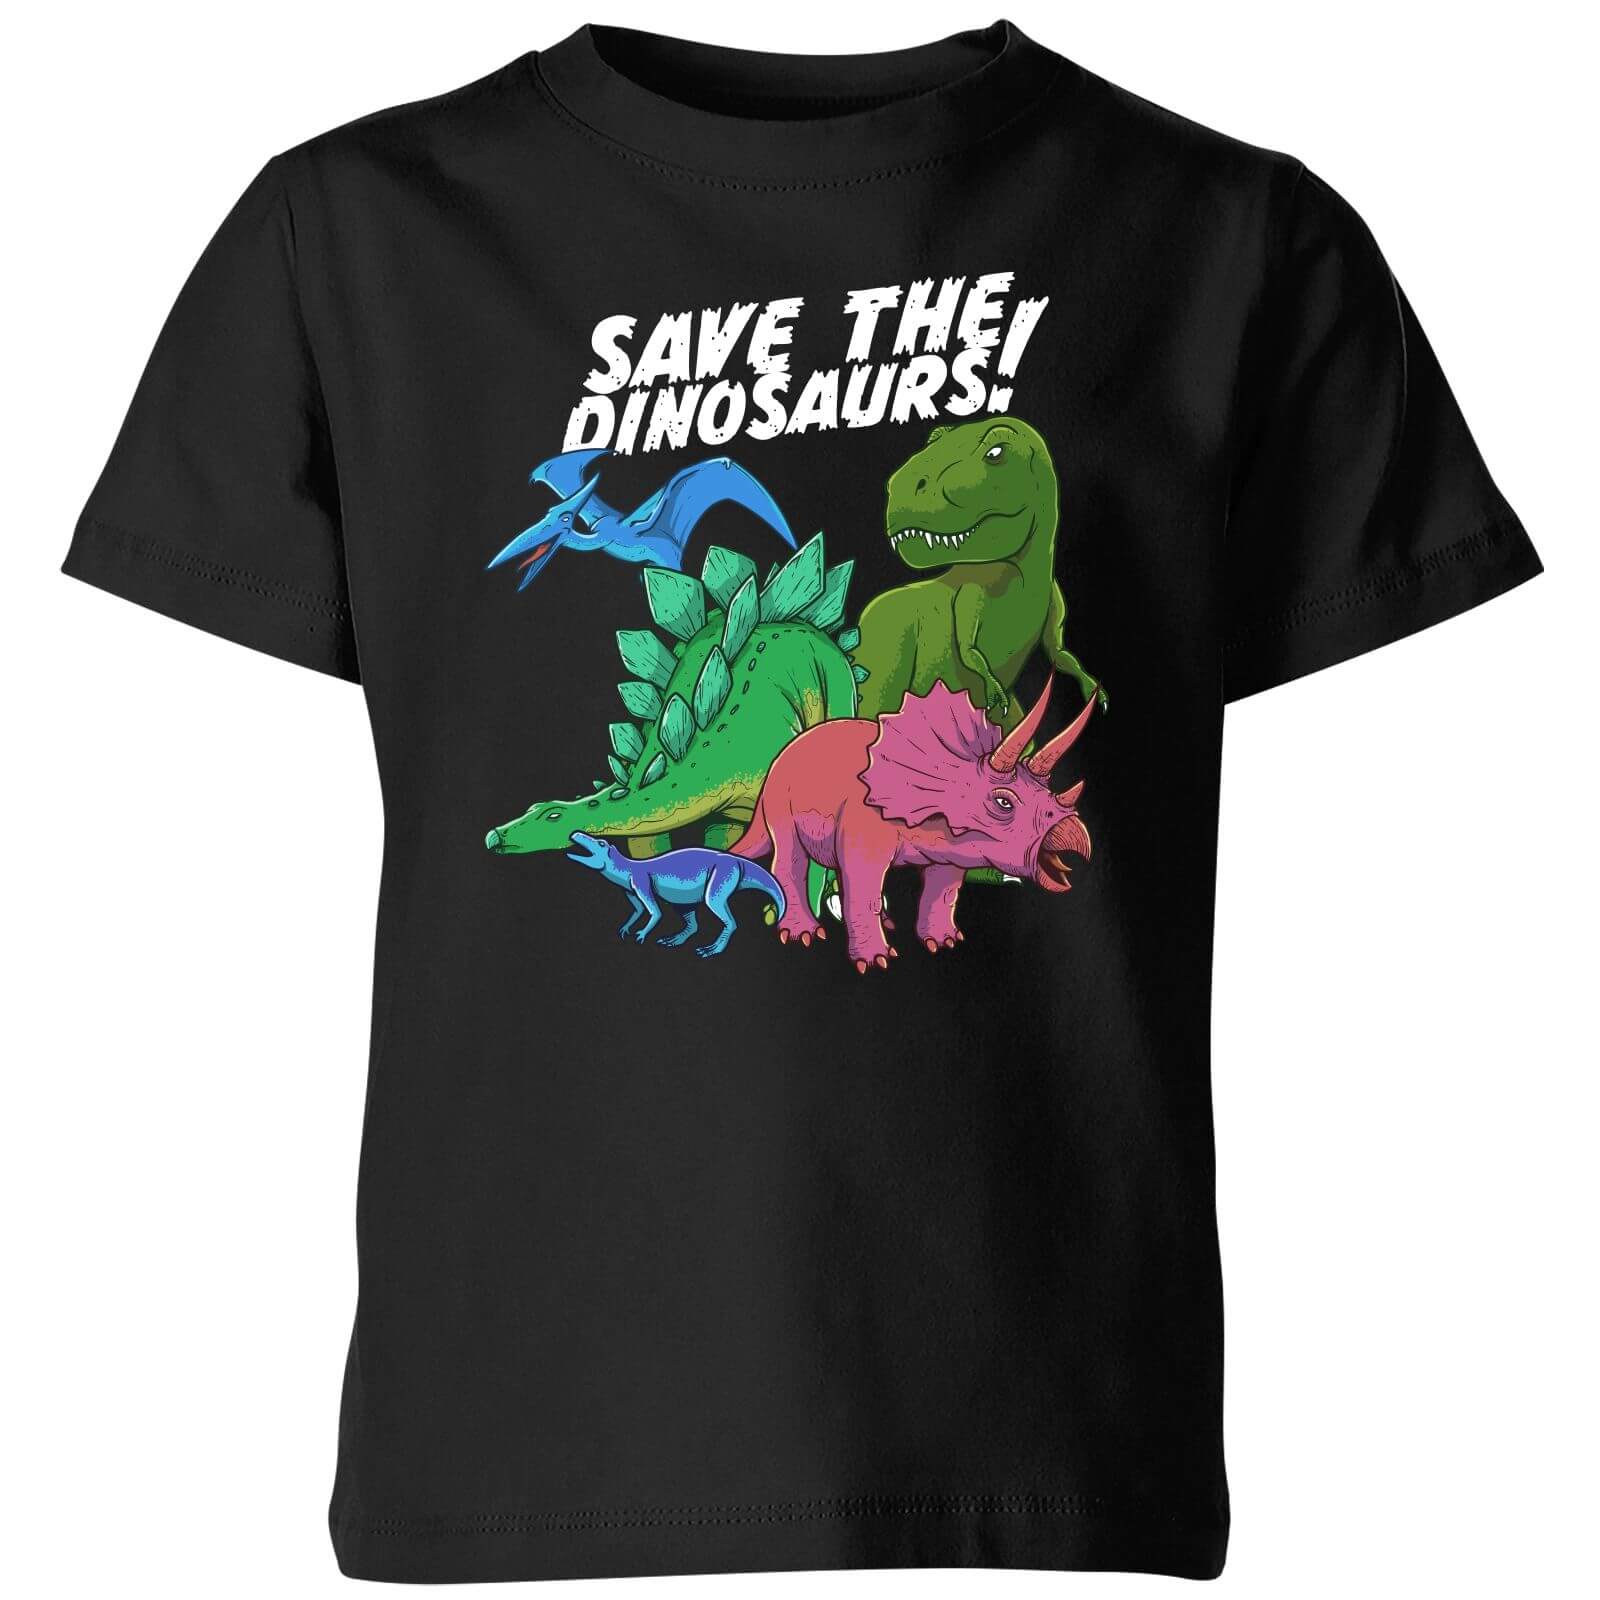 Save The Dinosaurs Kids' T-Shirt - Black - 3-4 Years - Black